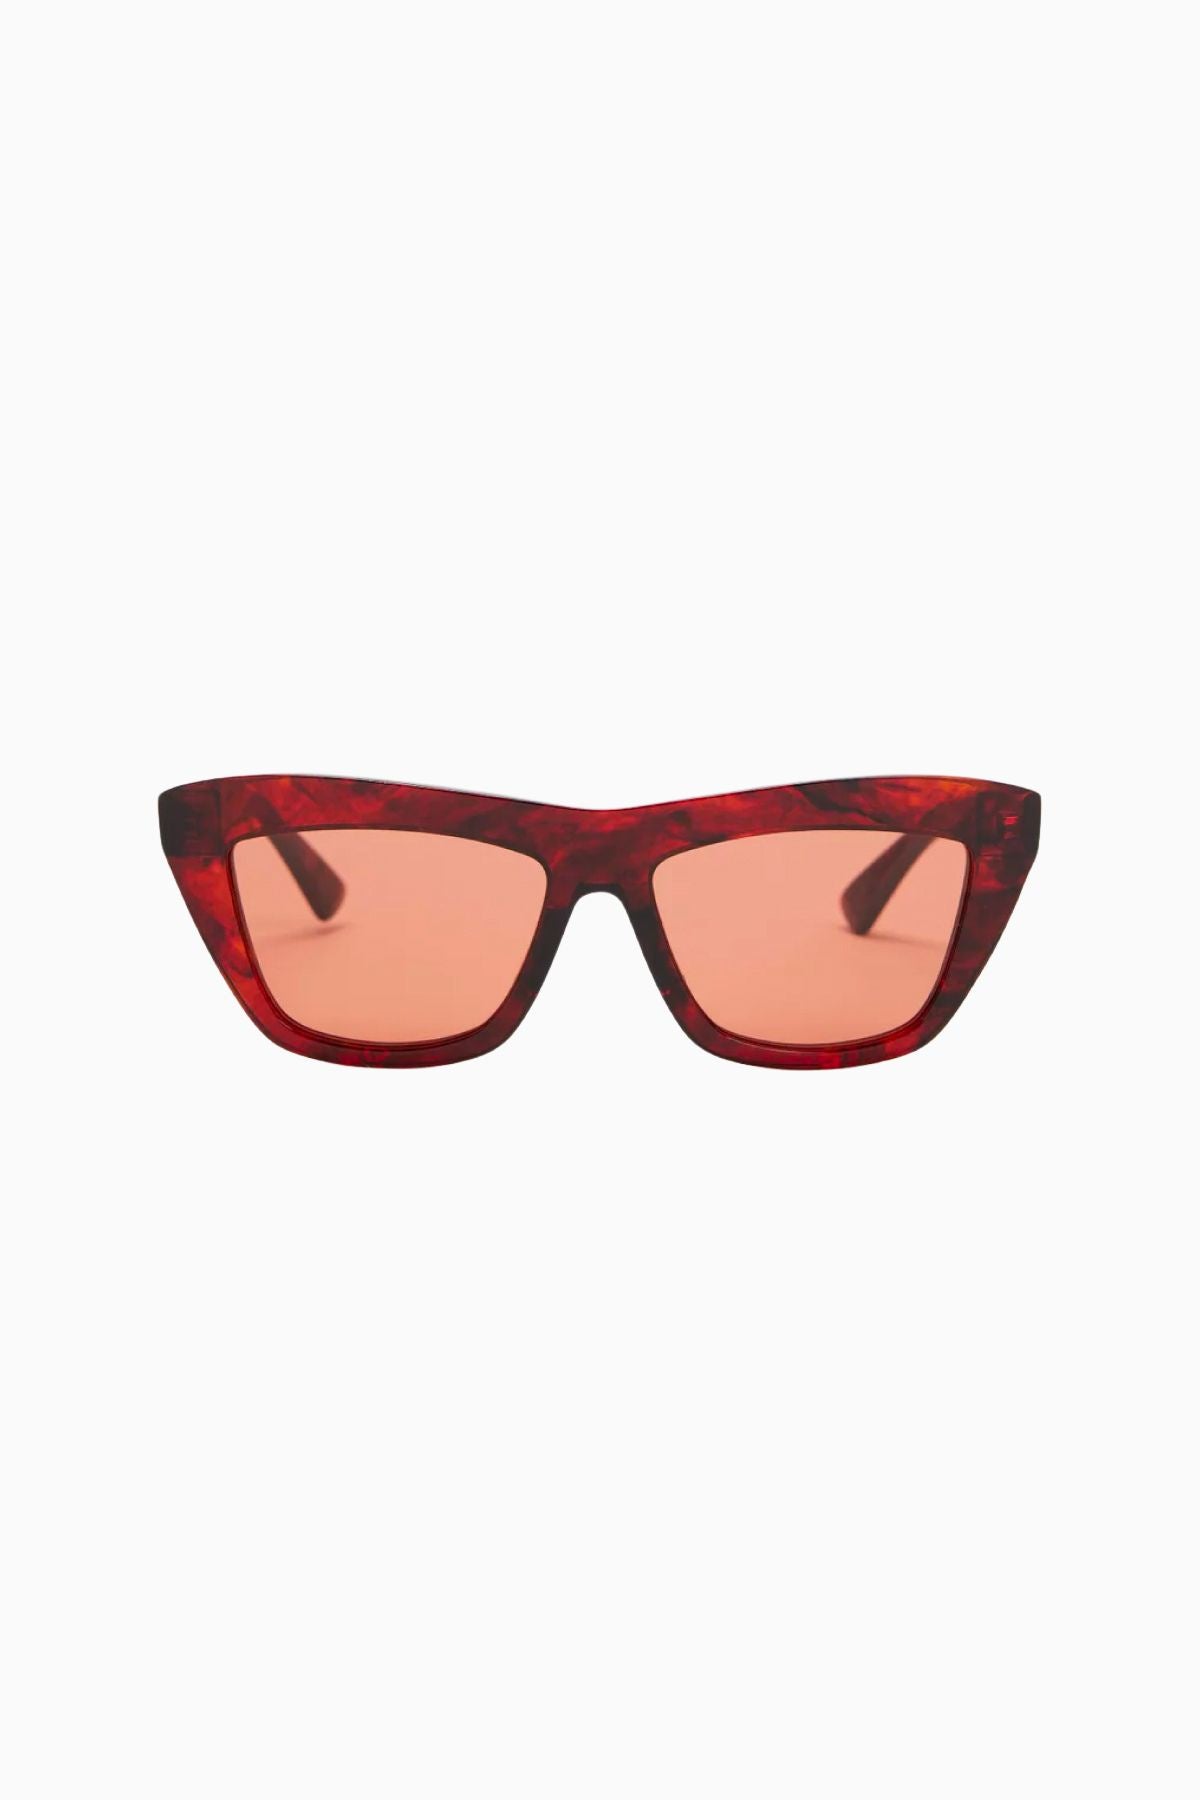 Bottega Veneta Cat Eye Sunglasses - Red Havana